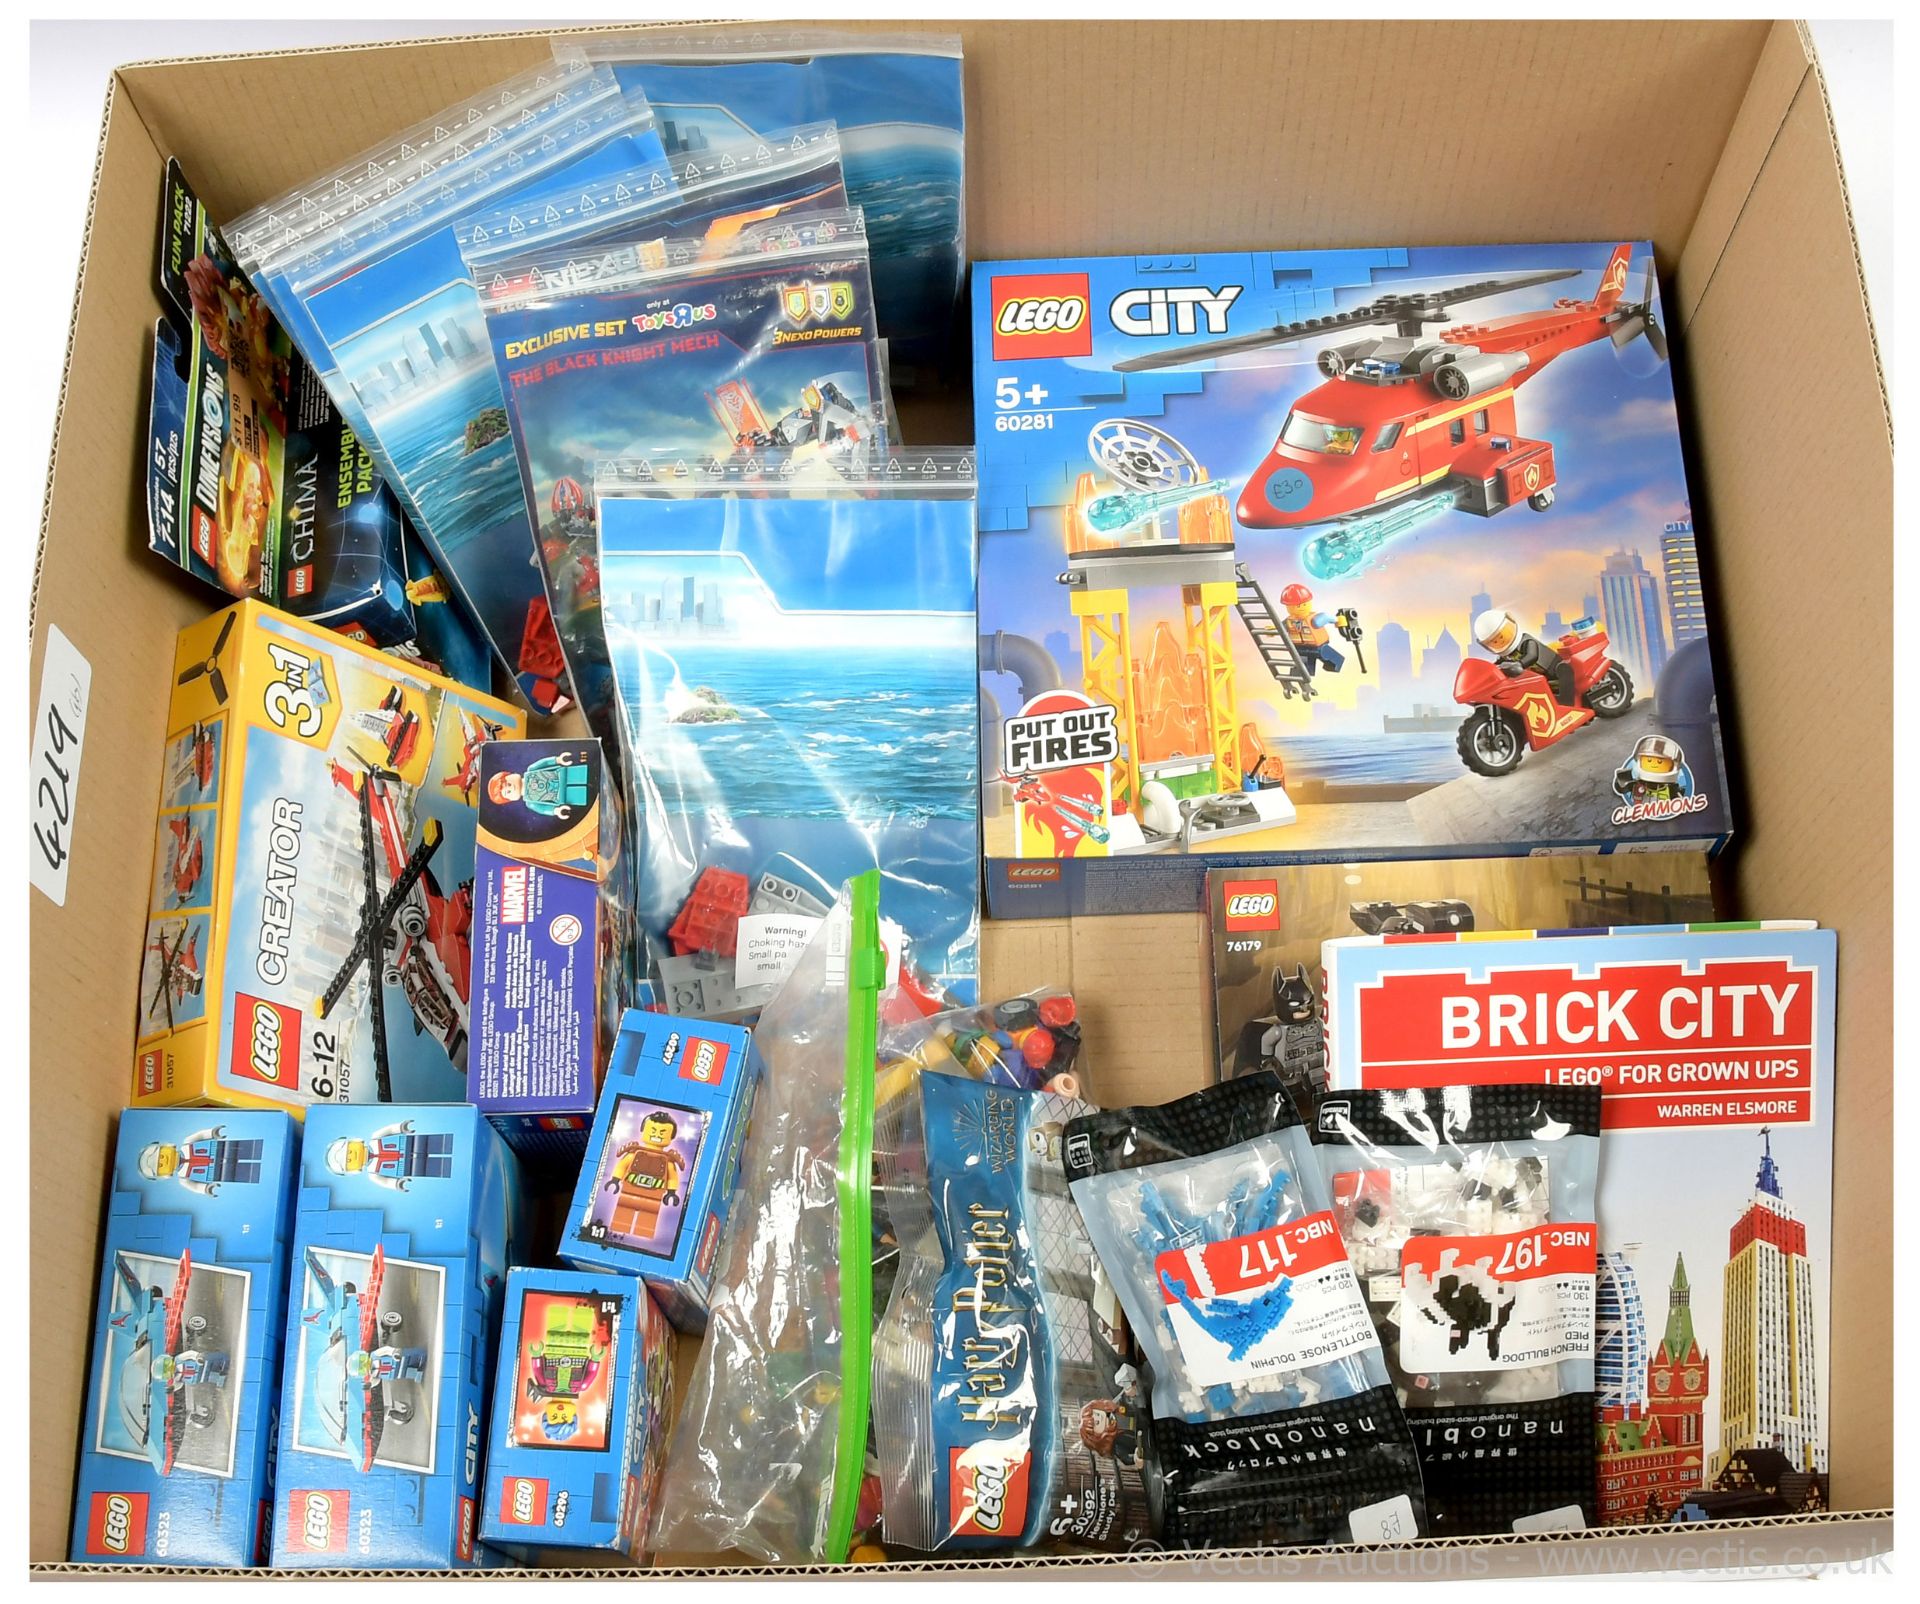 QTY inc Quantity of Lego sets and loose sets